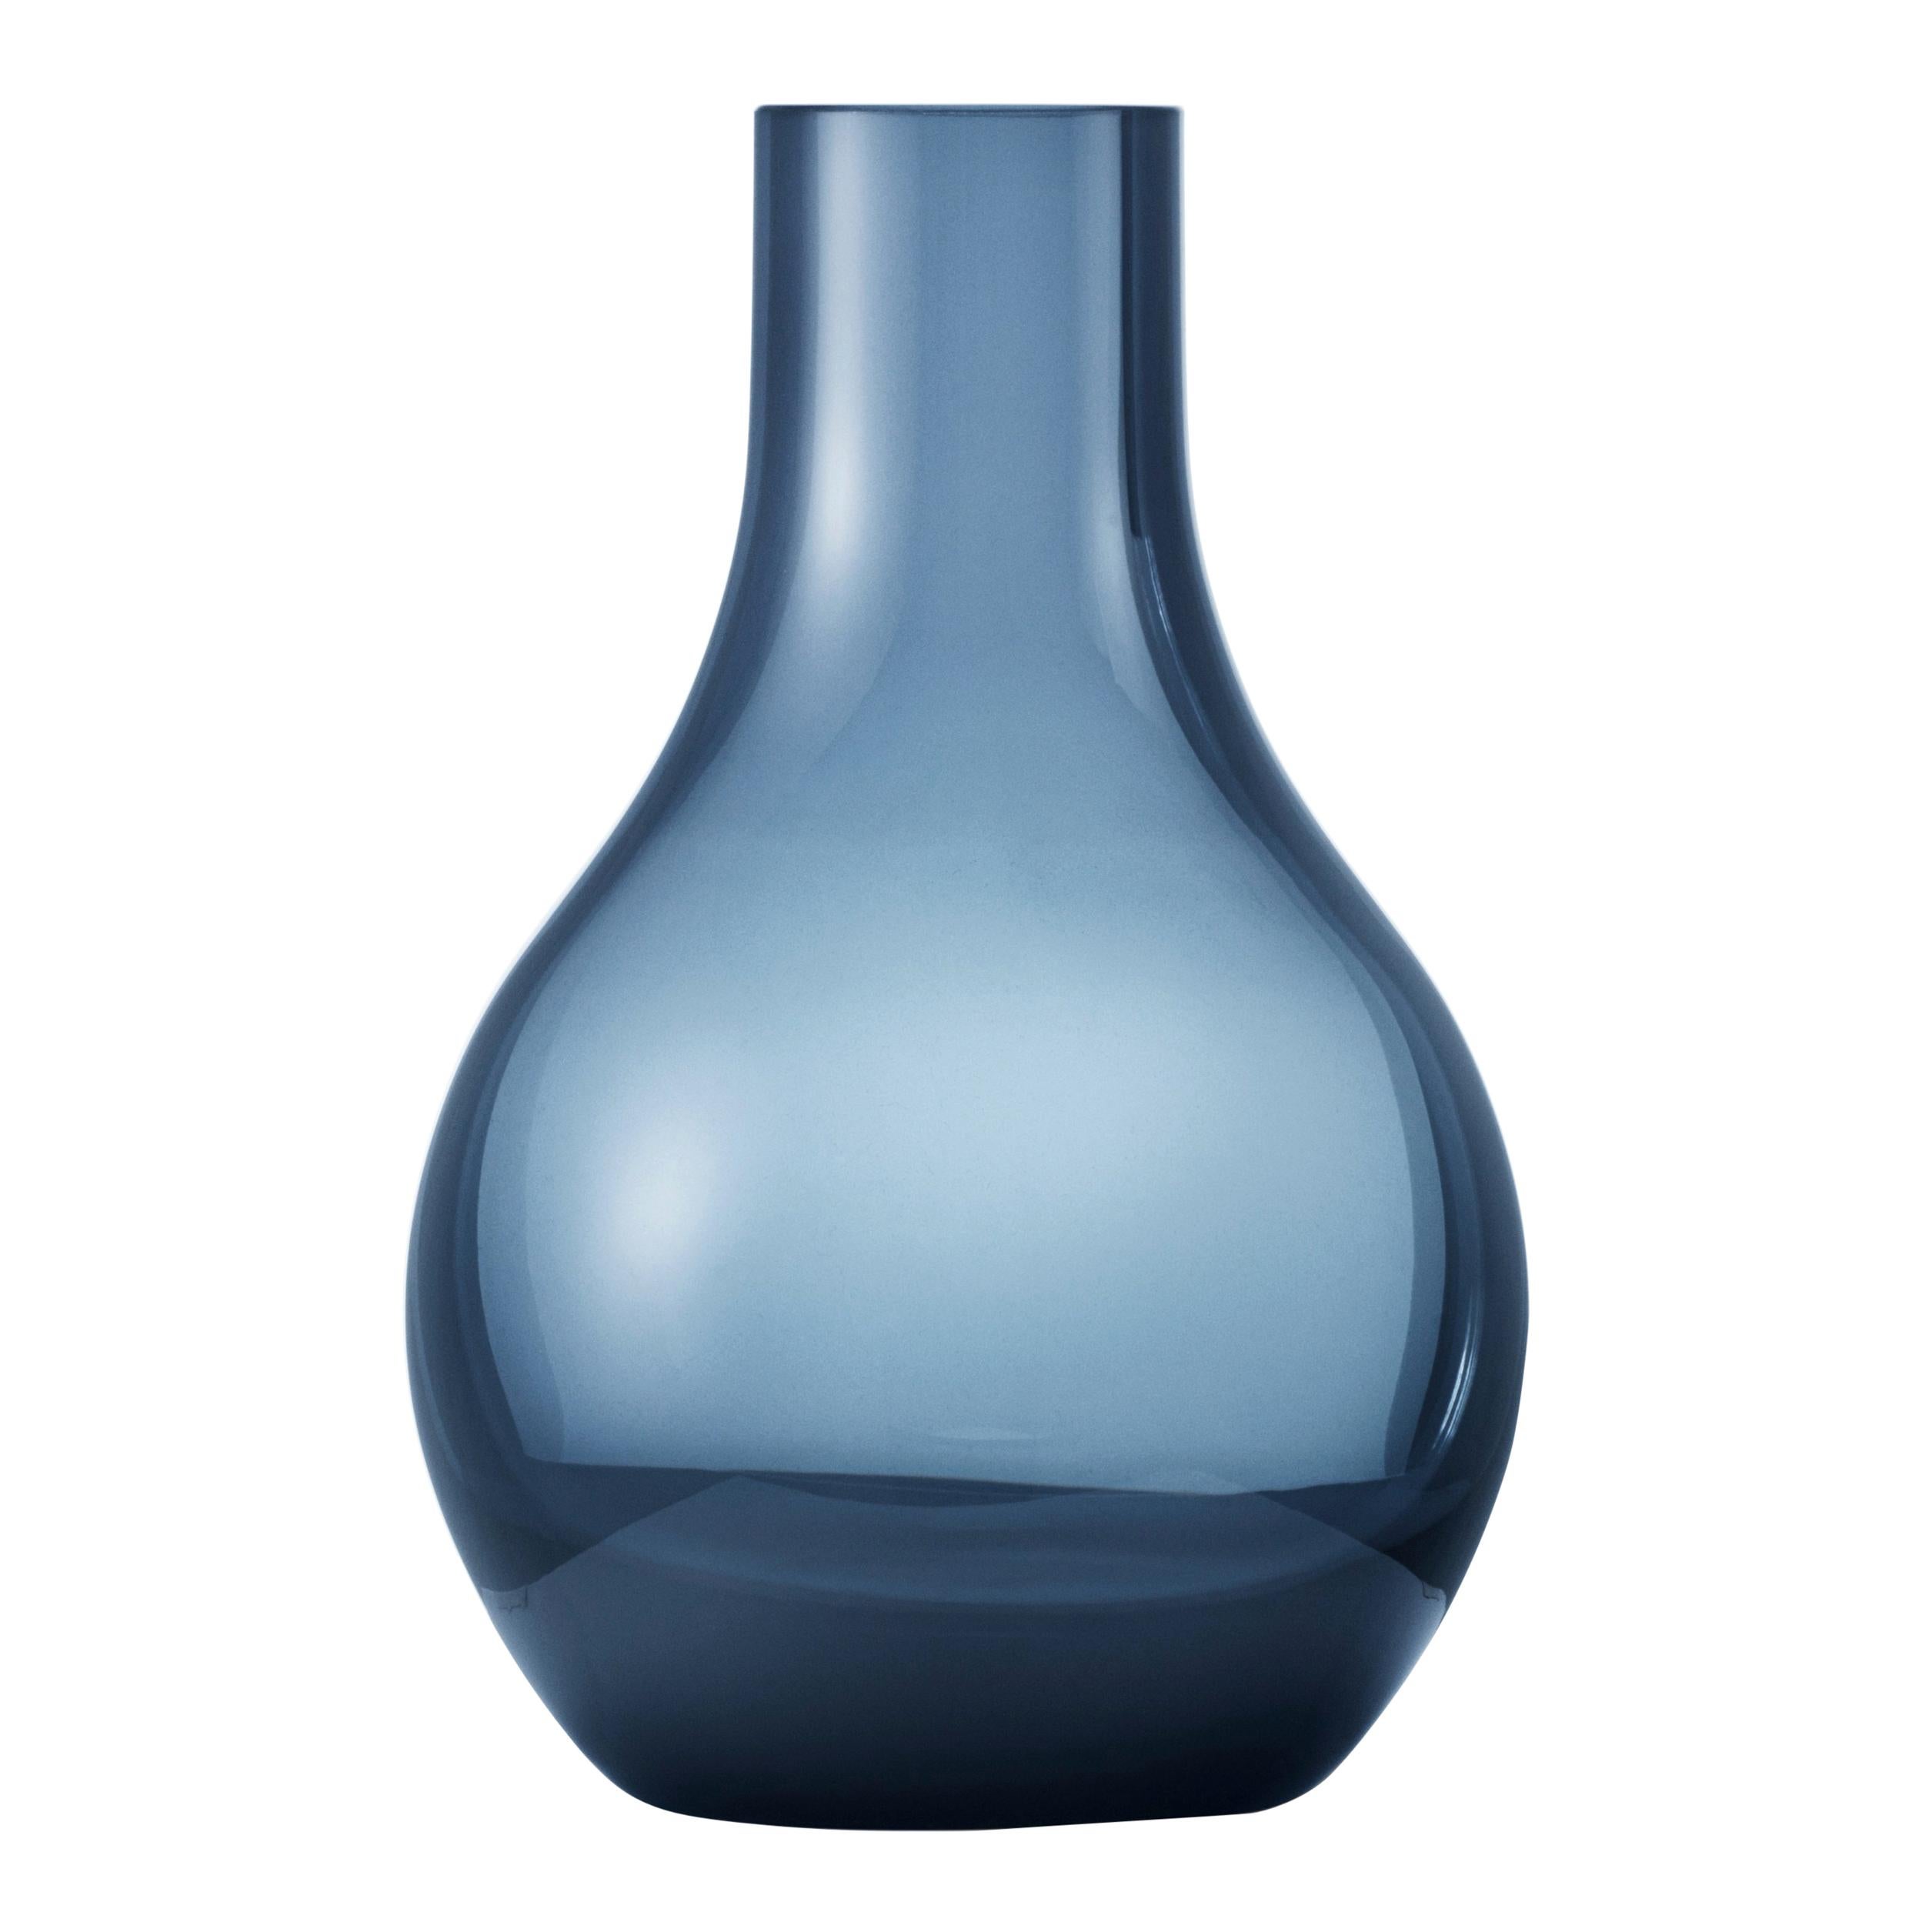 Georg Jensen Cafu Extra Small Vase in Glass by Holmbäck Nordentoft